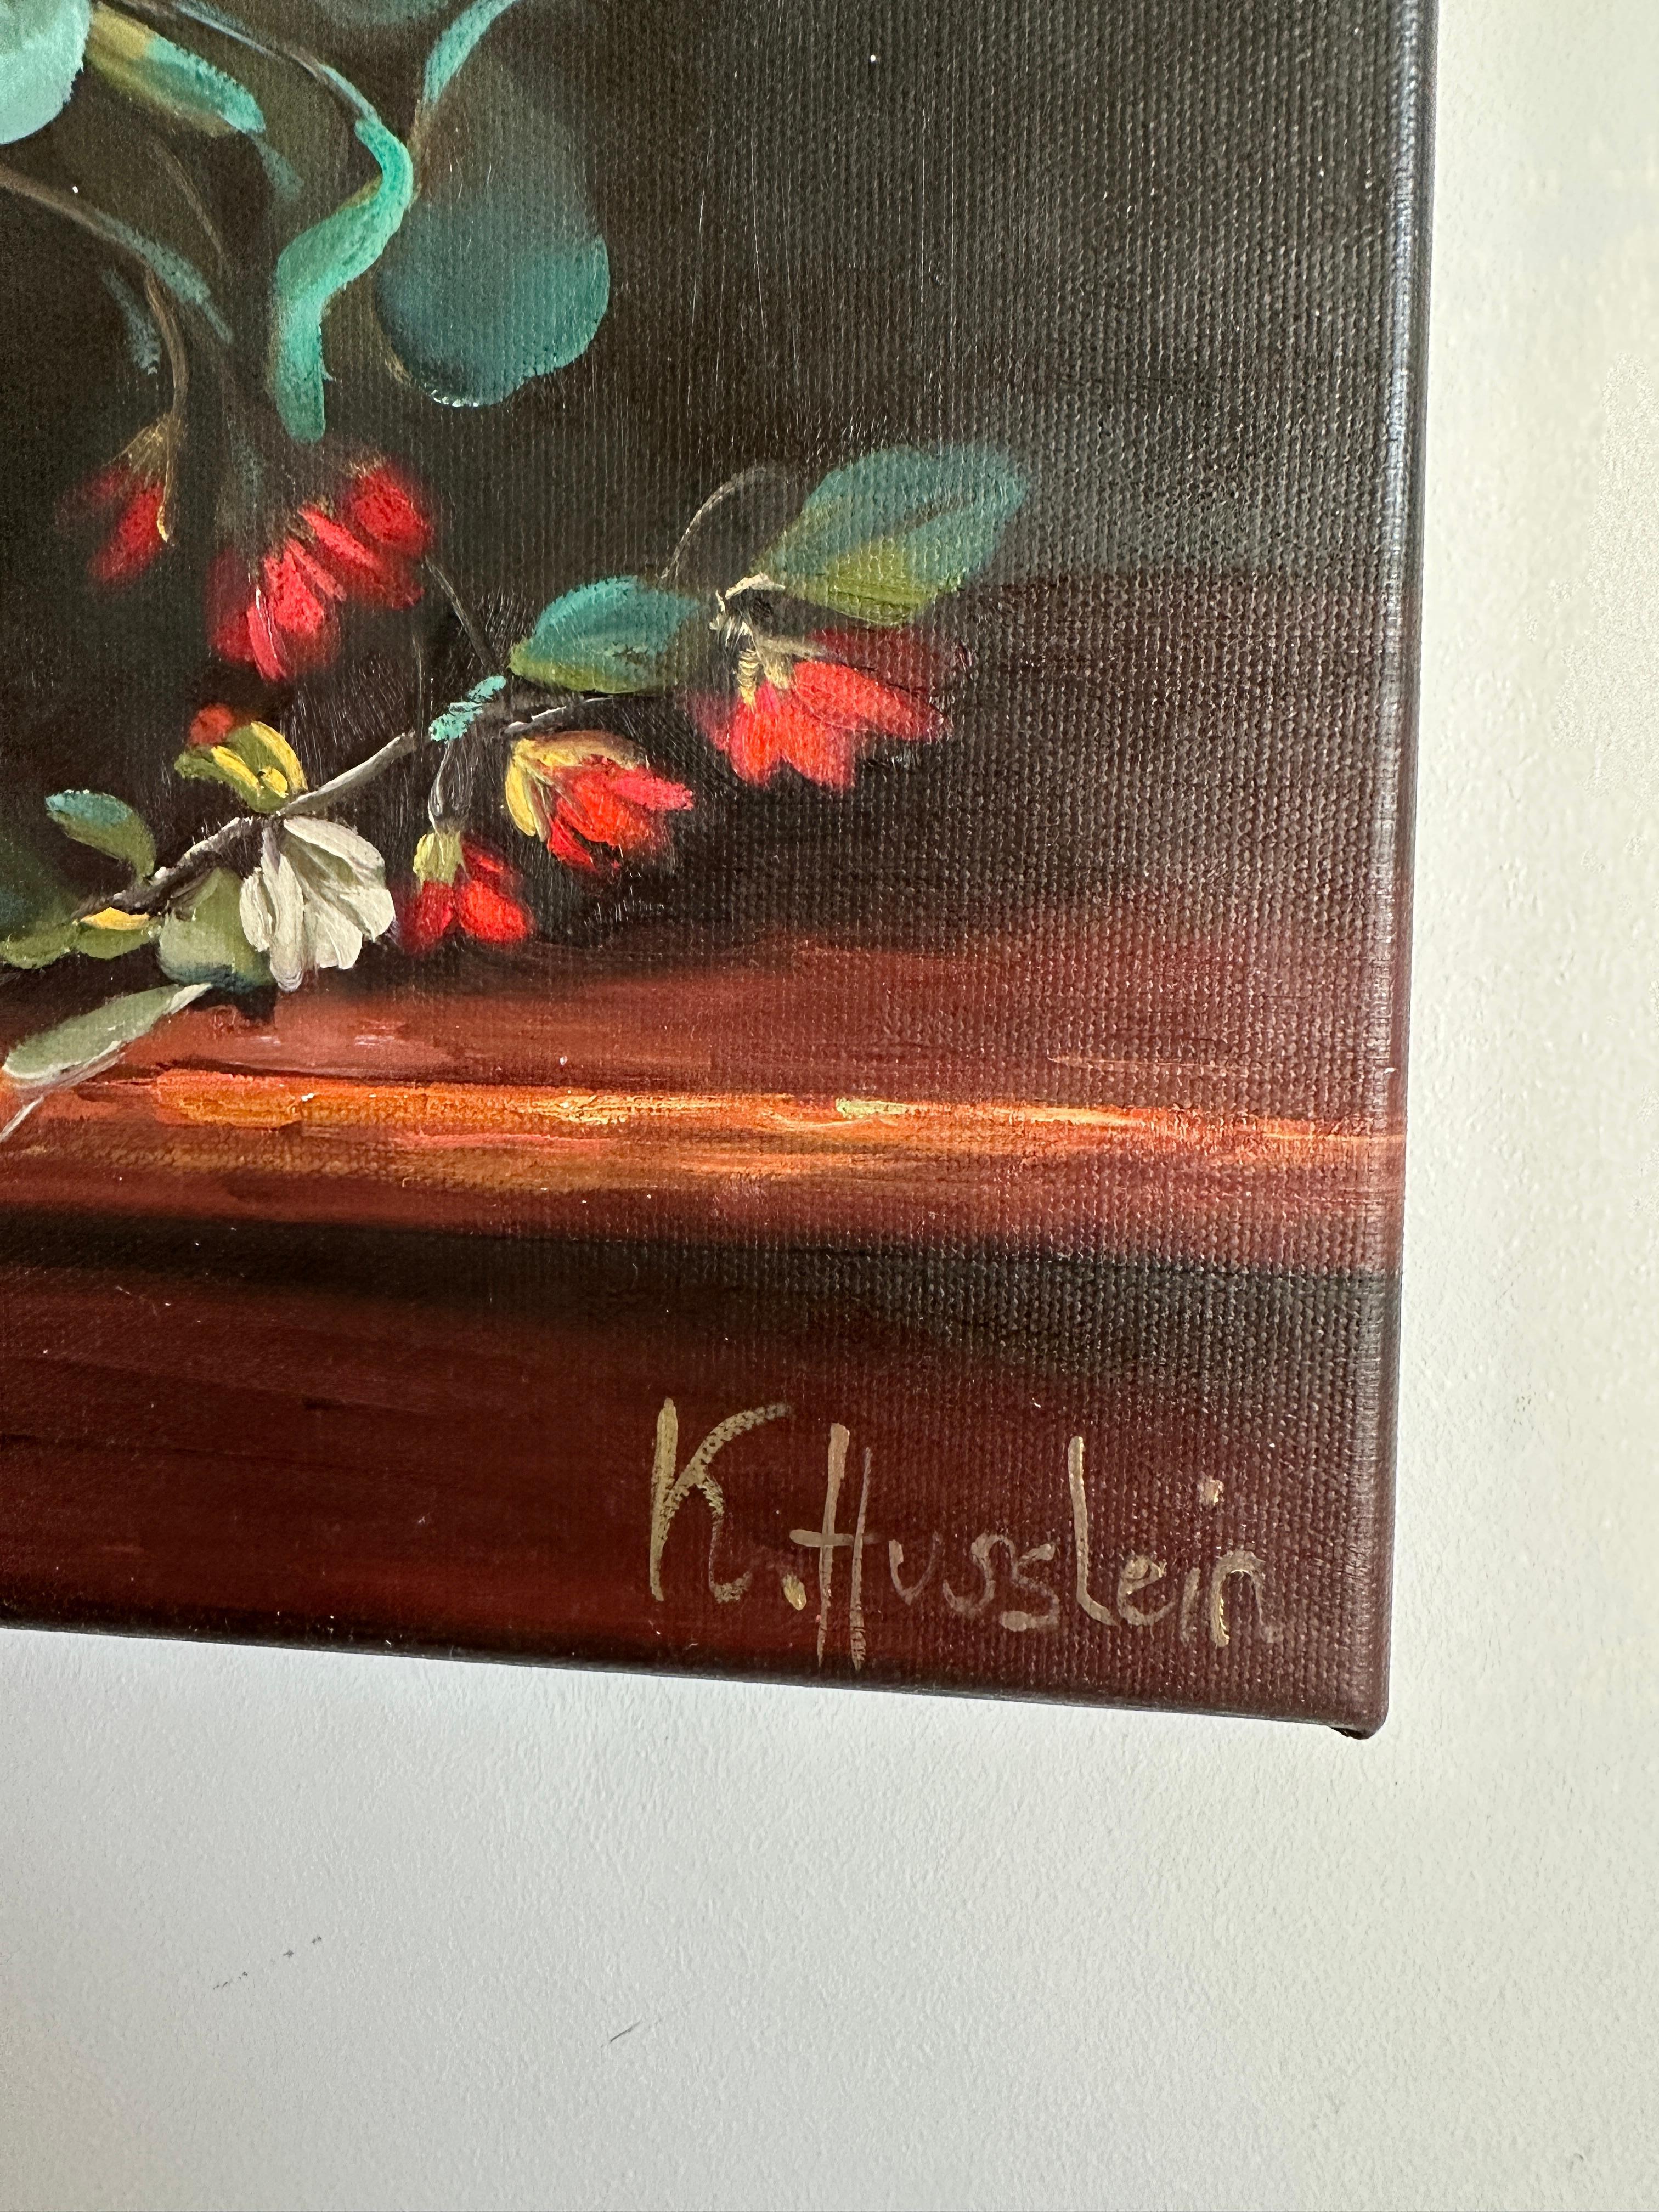 Heart over Head - Katharina Husslein Contemporary Flower Still life Oil Painting 6